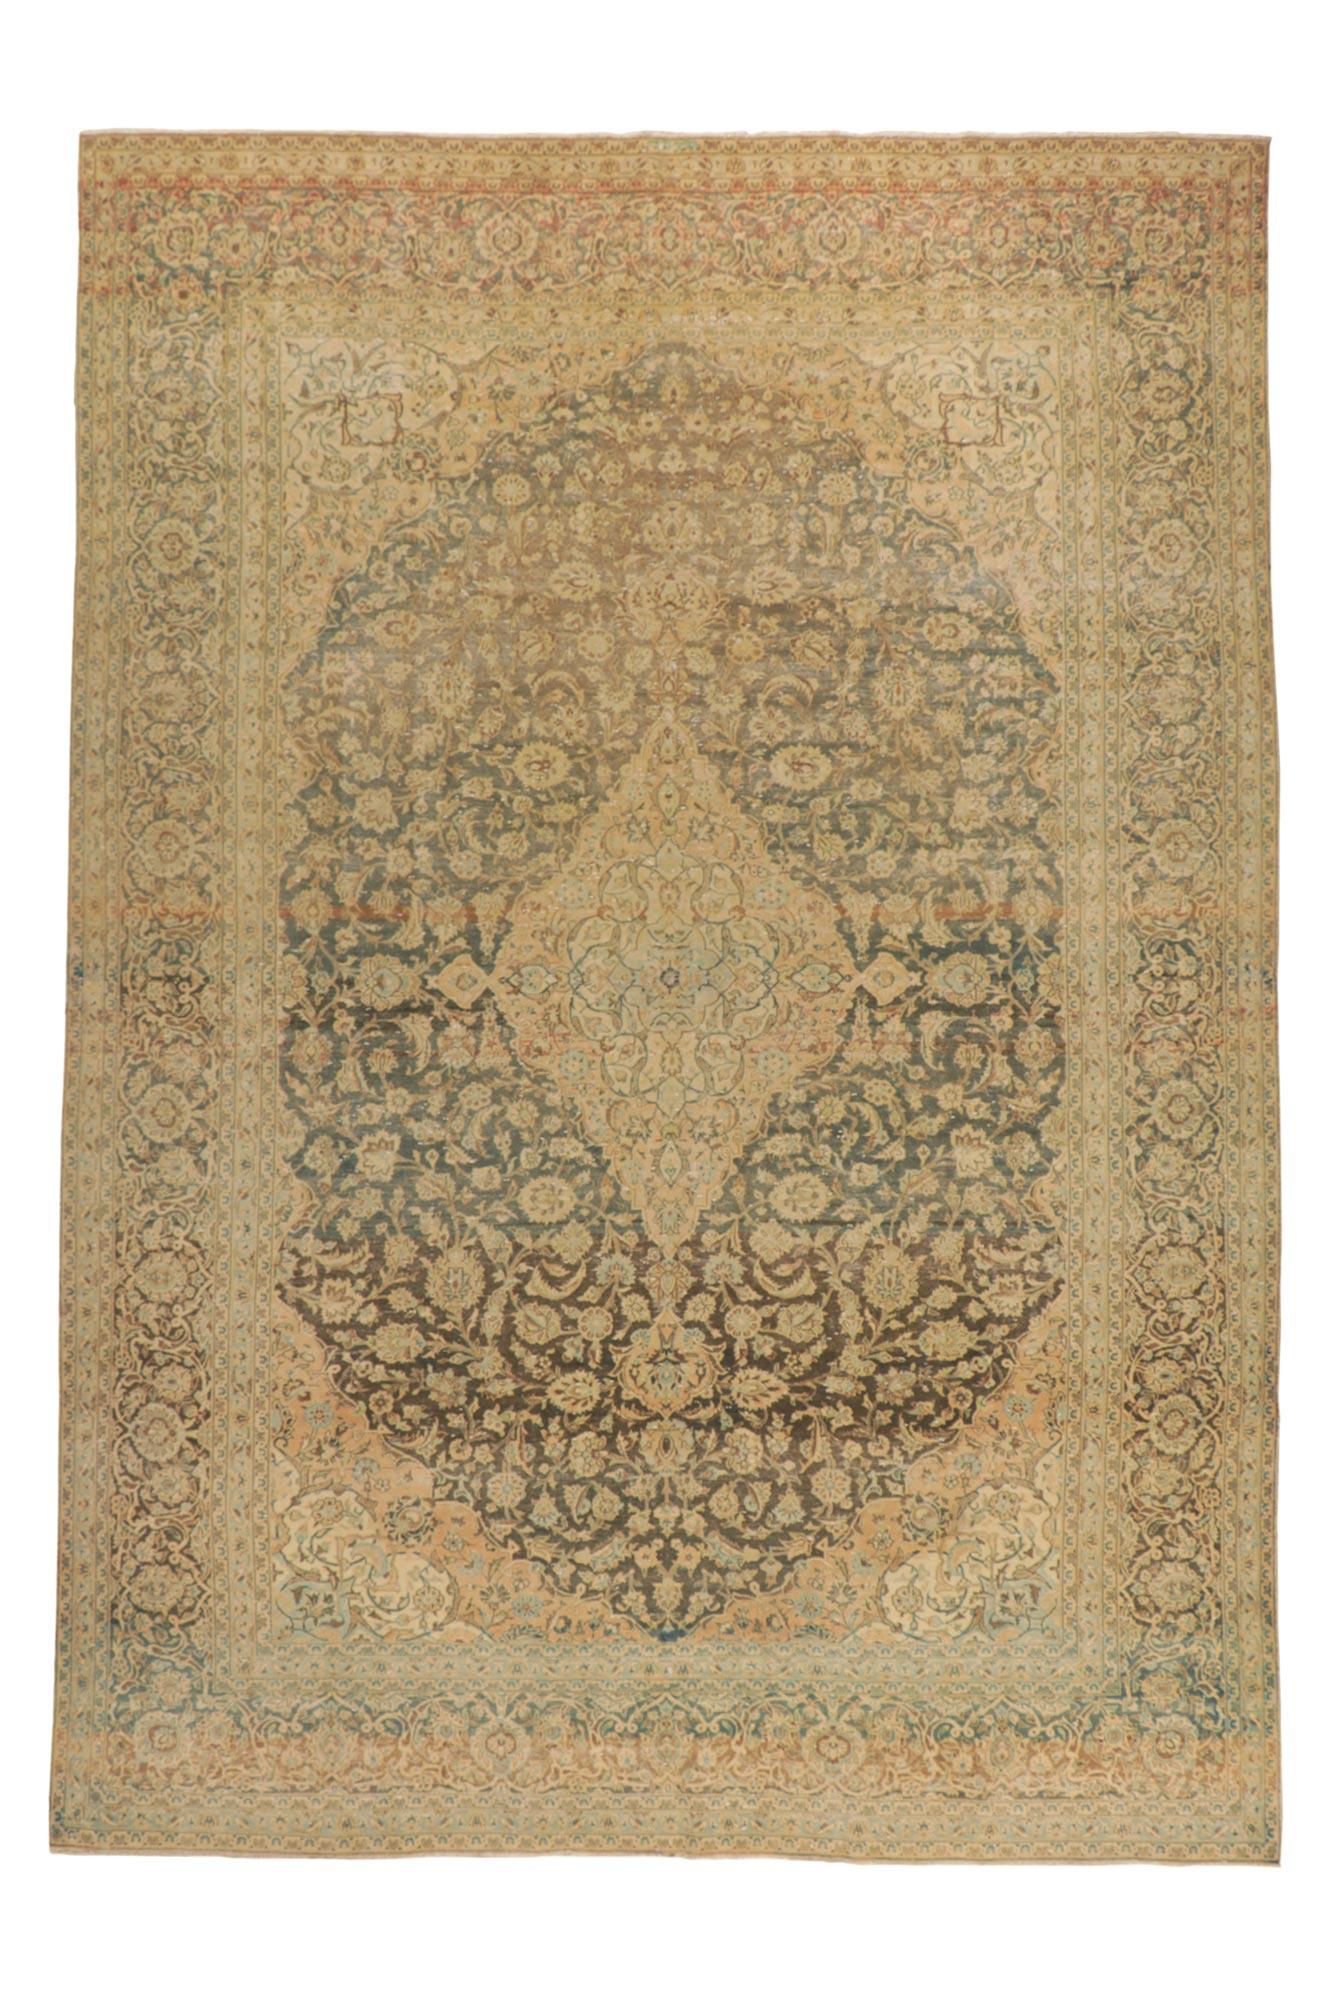 Antique Persian Tabriz Rug, Earth-Tone Elegance Meets Rustic Sensibility For Sale 3